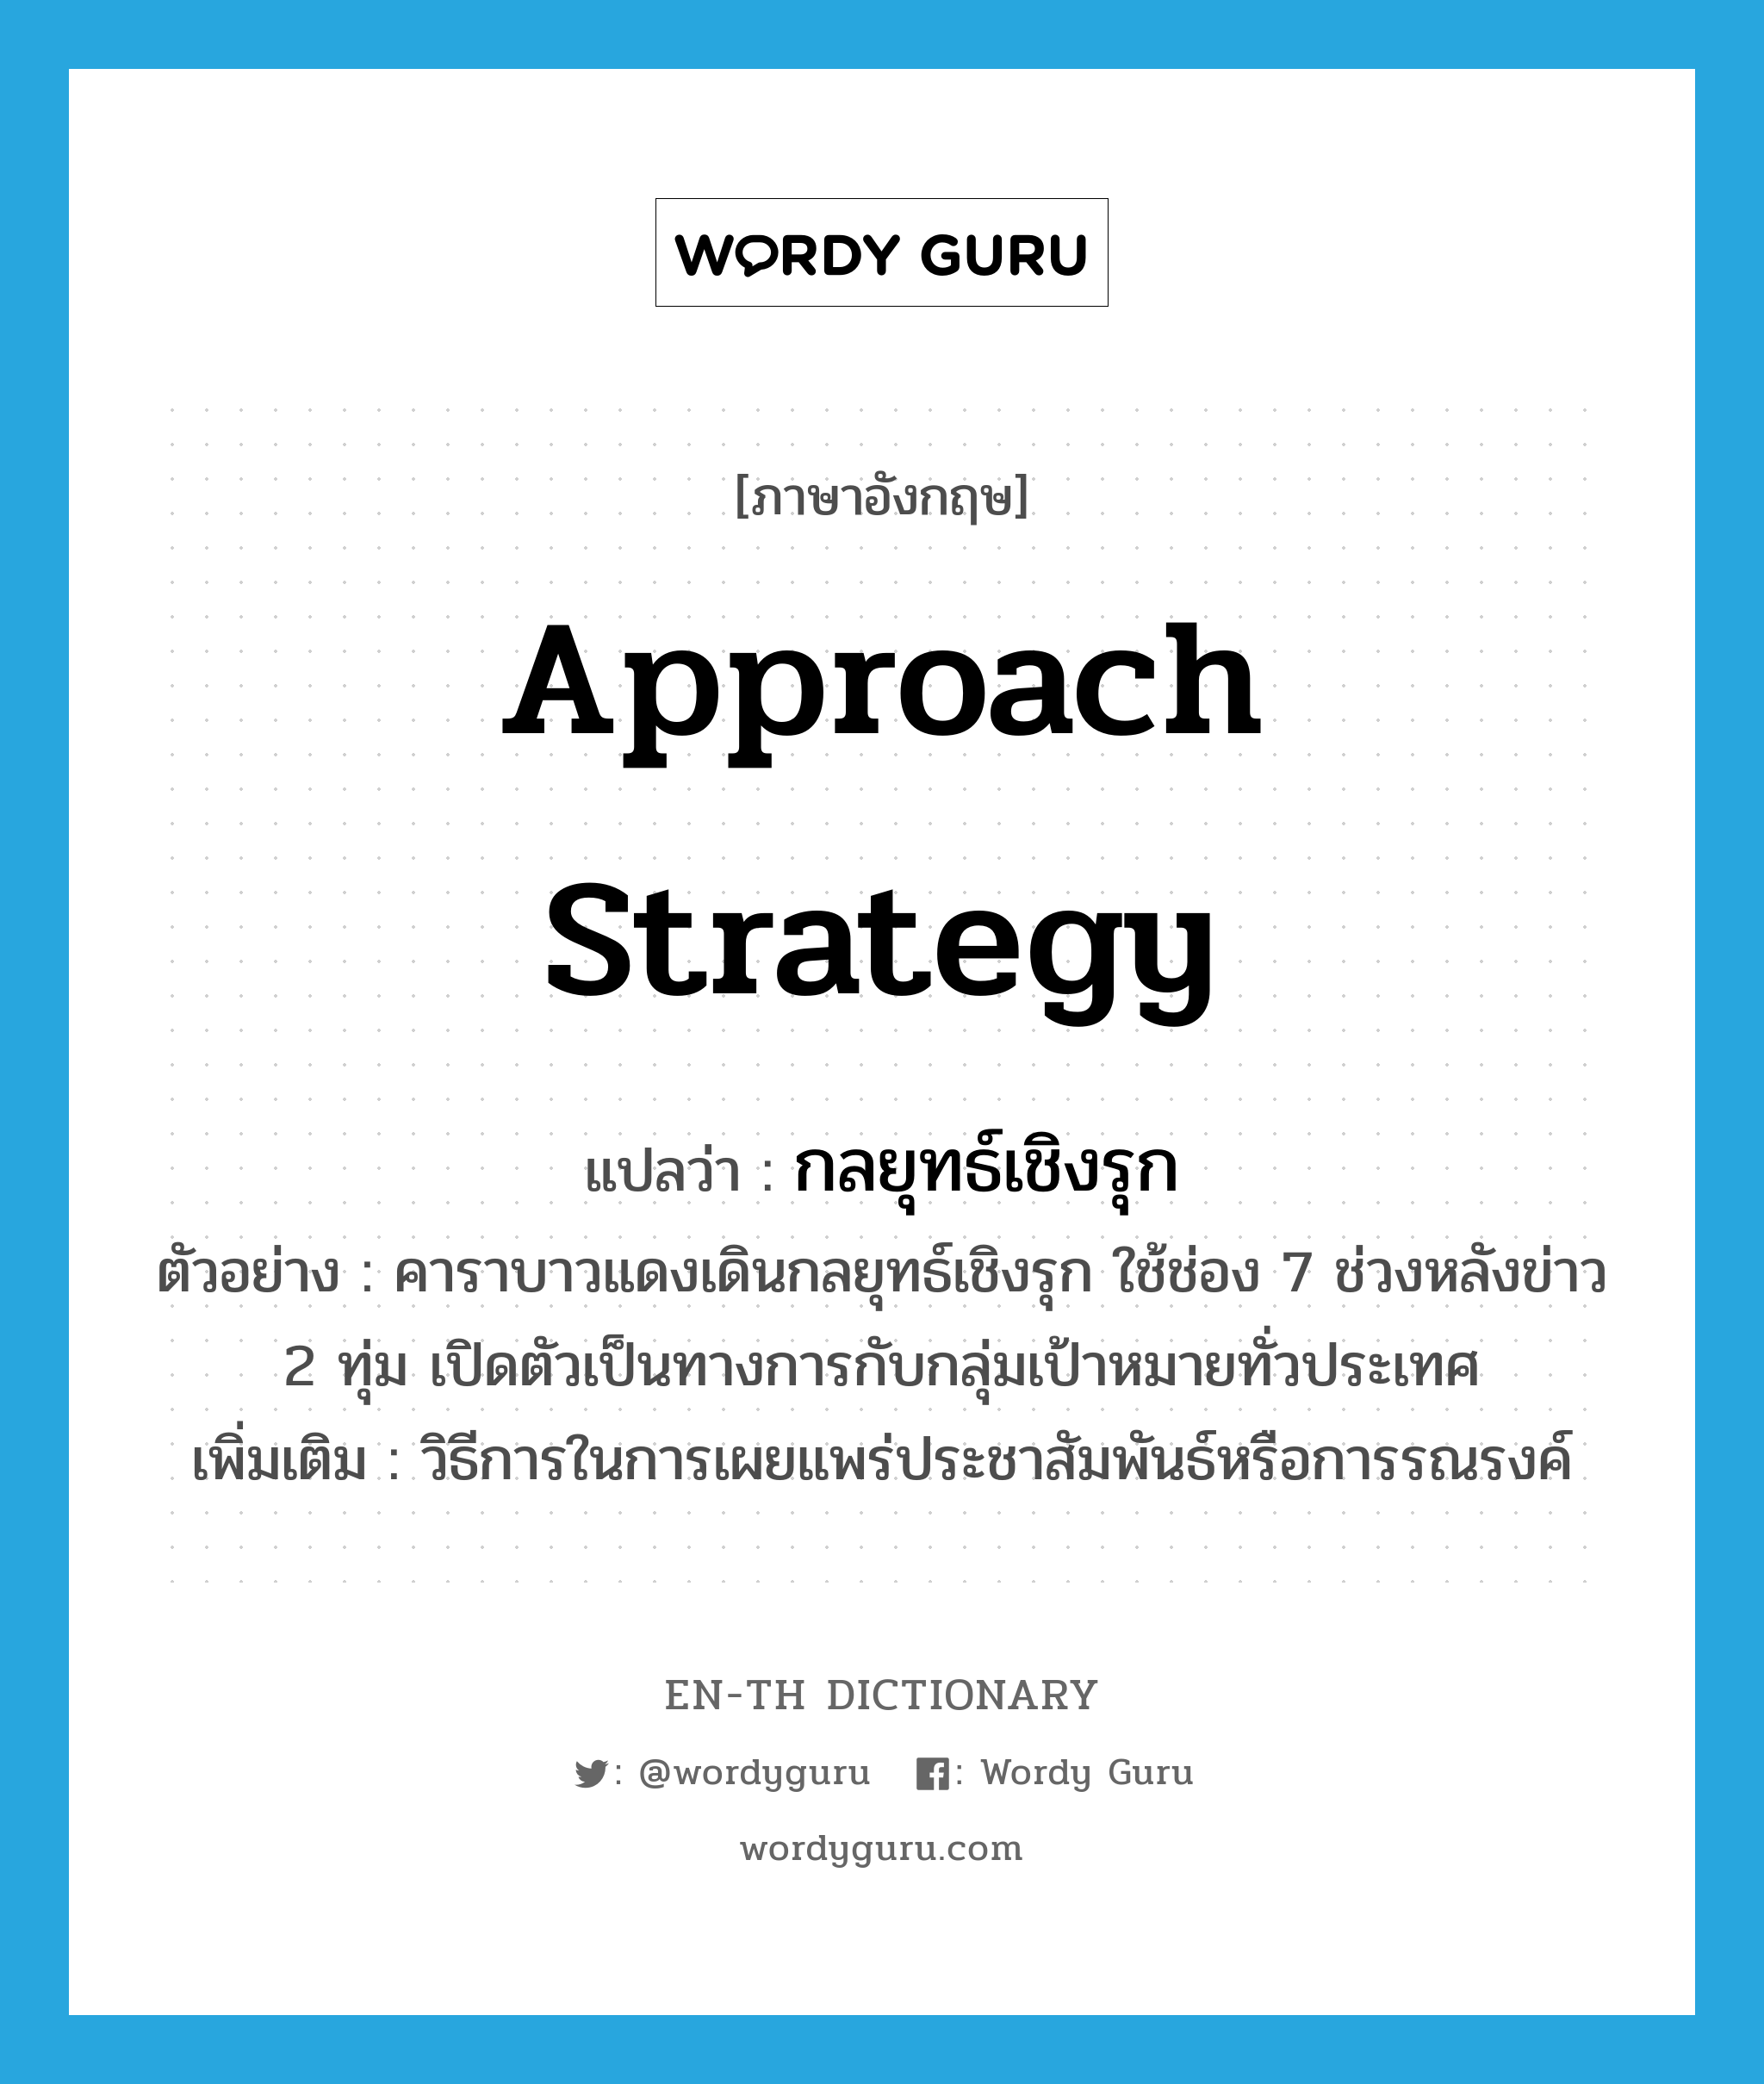 approach strategy แปลว่า?, คำศัพท์ภาษาอังกฤษ approach strategy แปลว่า กลยุทธ์เชิงรุก ประเภท N ตัวอย่าง คาราบาวแดงเดินกลยุทธ์เชิงรุก ใช้ช่อง 7 ช่วงหลังข่าว 2 ทุ่ม เปิดตัวเป็นทางการกับกลุ่มเป้าหมายทั่วประเทศ เพิ่มเติม วิธีการในการเผยแพร่ประชาสัมพันธ์หรือการรณรงค์ หมวด N